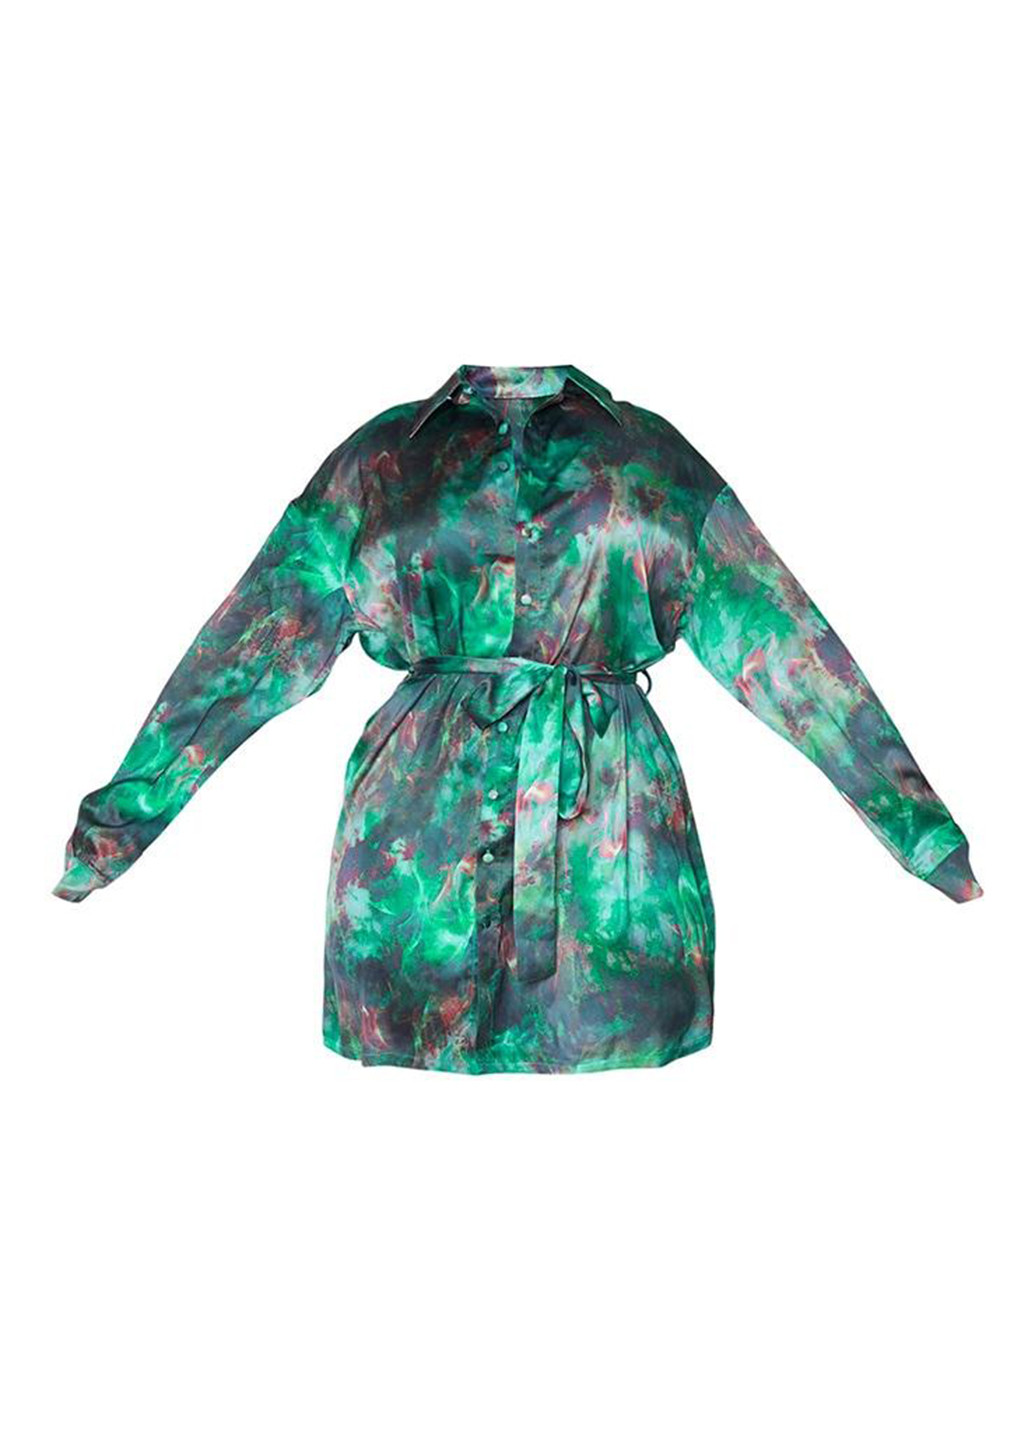 Зеленое кэжуал платье рубашка PrettyLittleThing с абстрактным узором